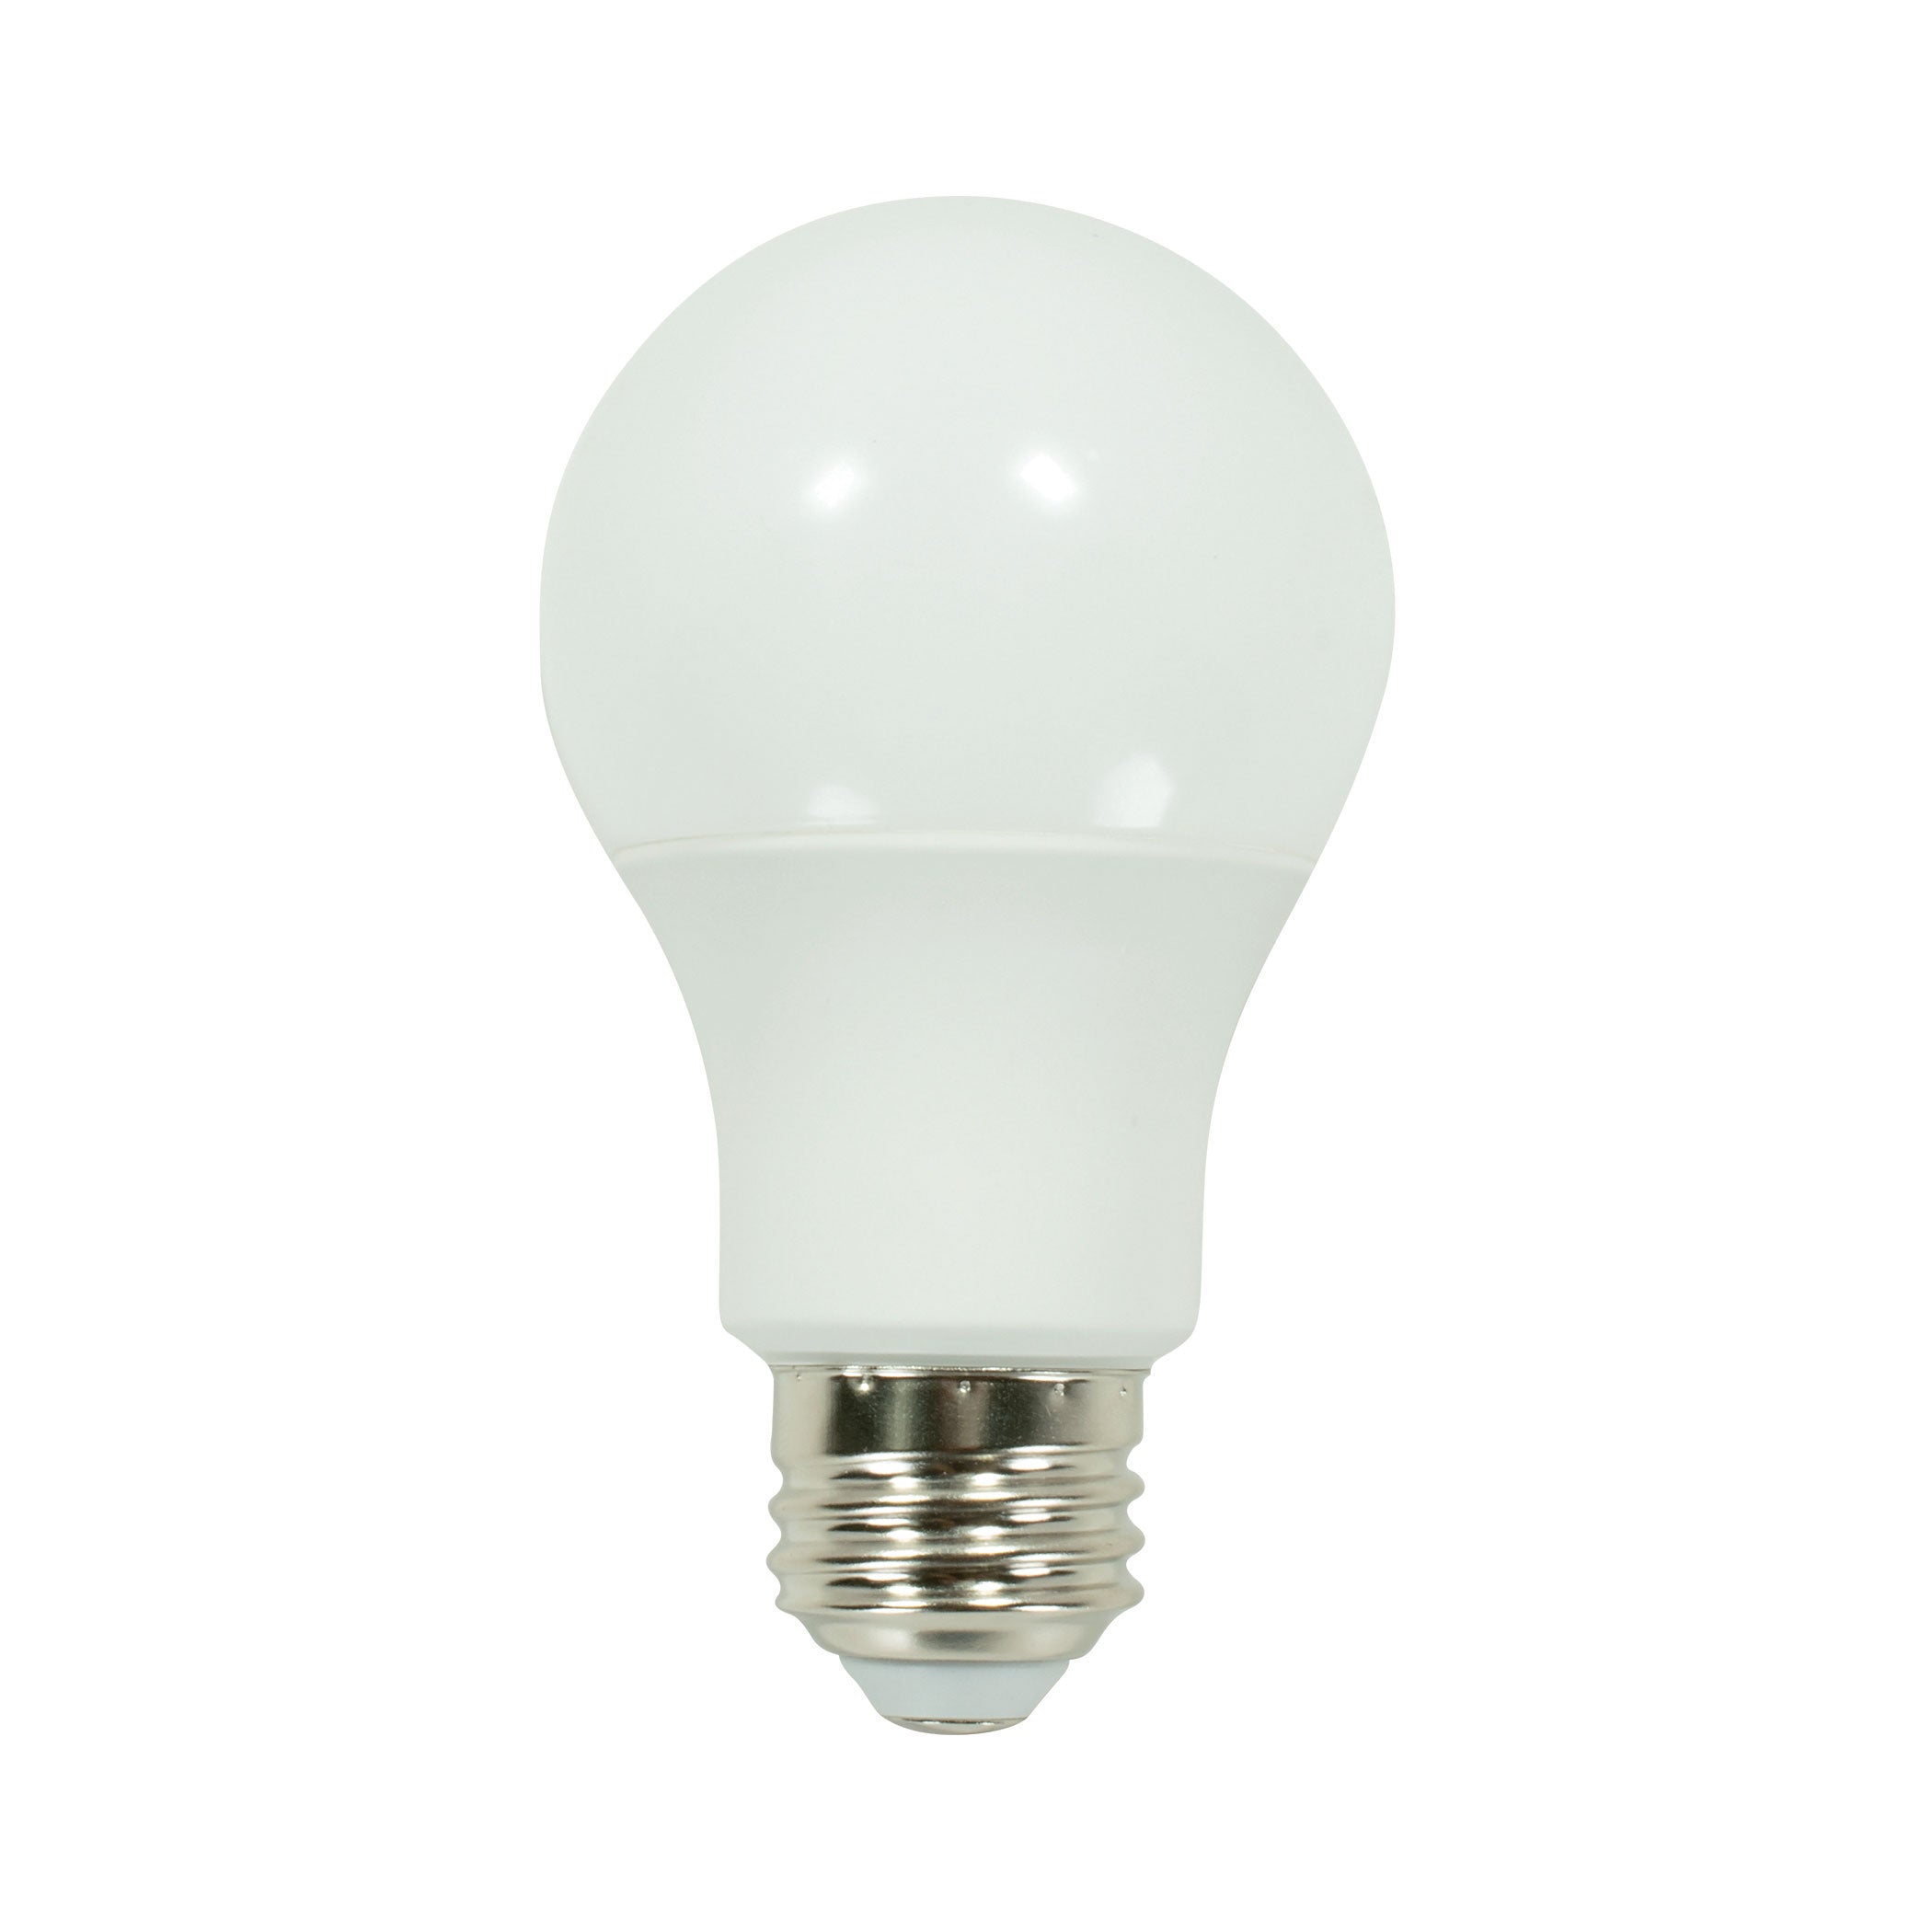 800 Lumen LED A19 Bulb, 9-Watt, 60-Watt Equivalent E26, 10-Pack